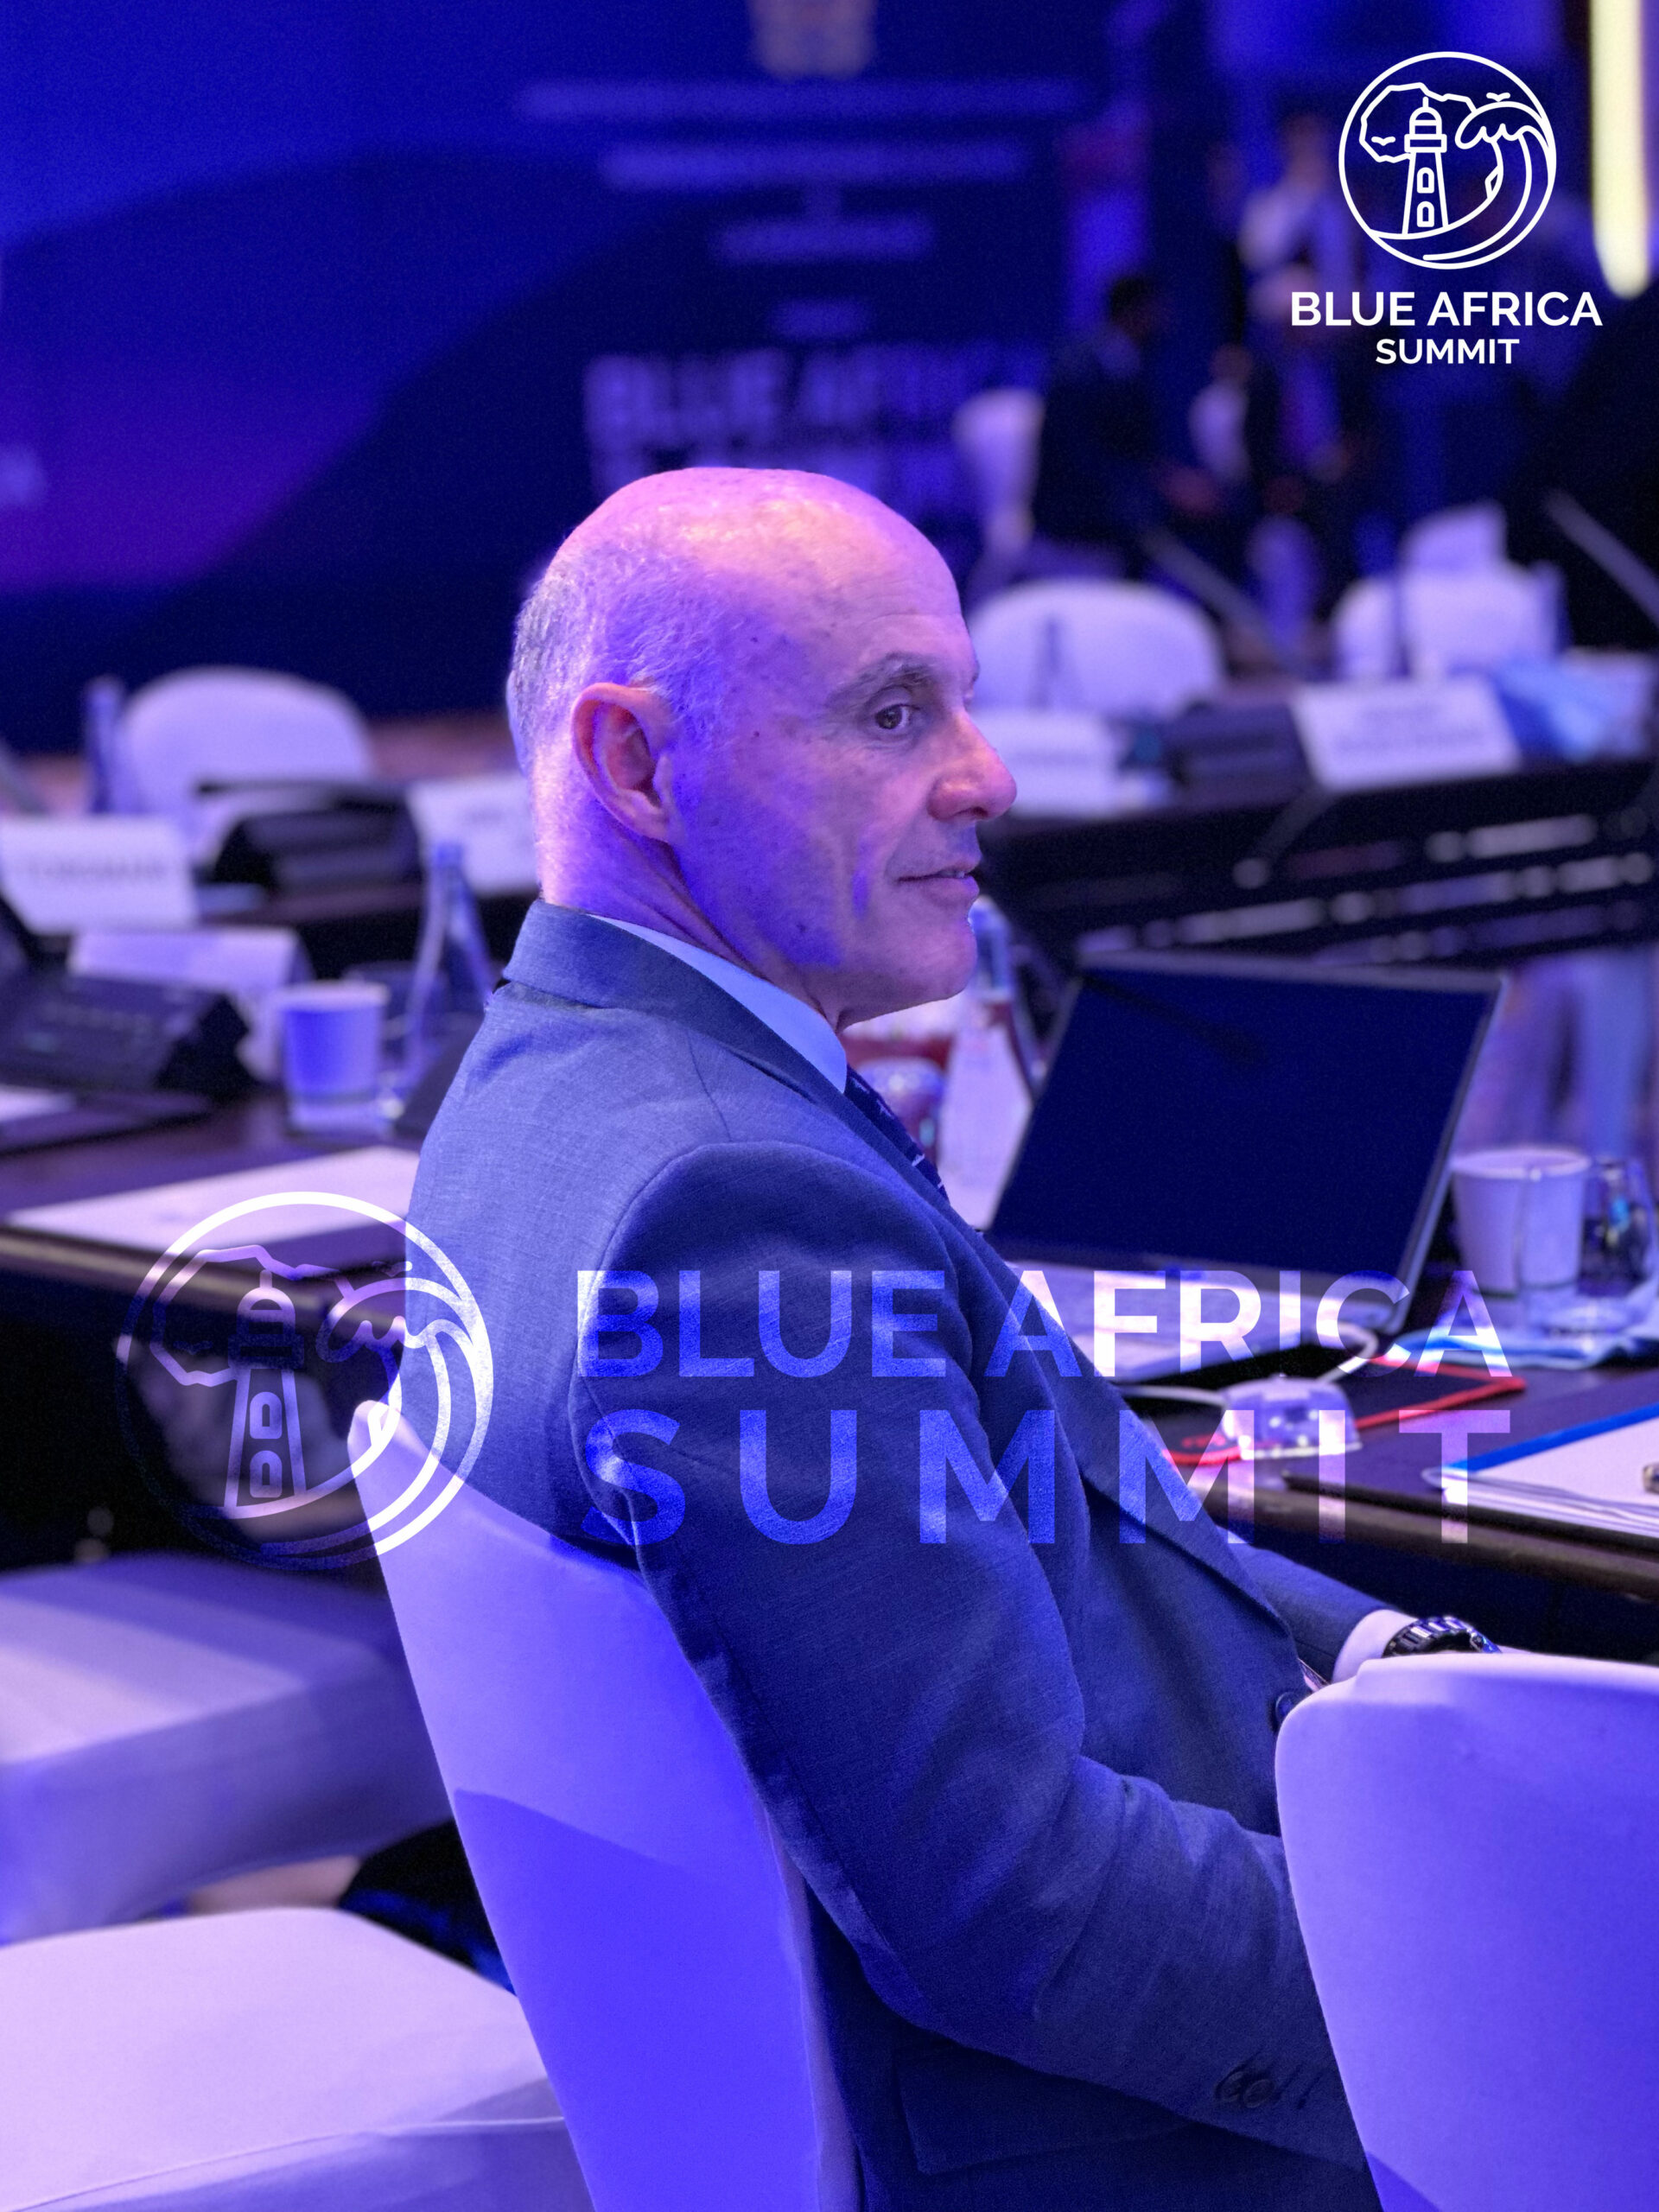 Blue Africa Summit - Ricardo Serrao Santos